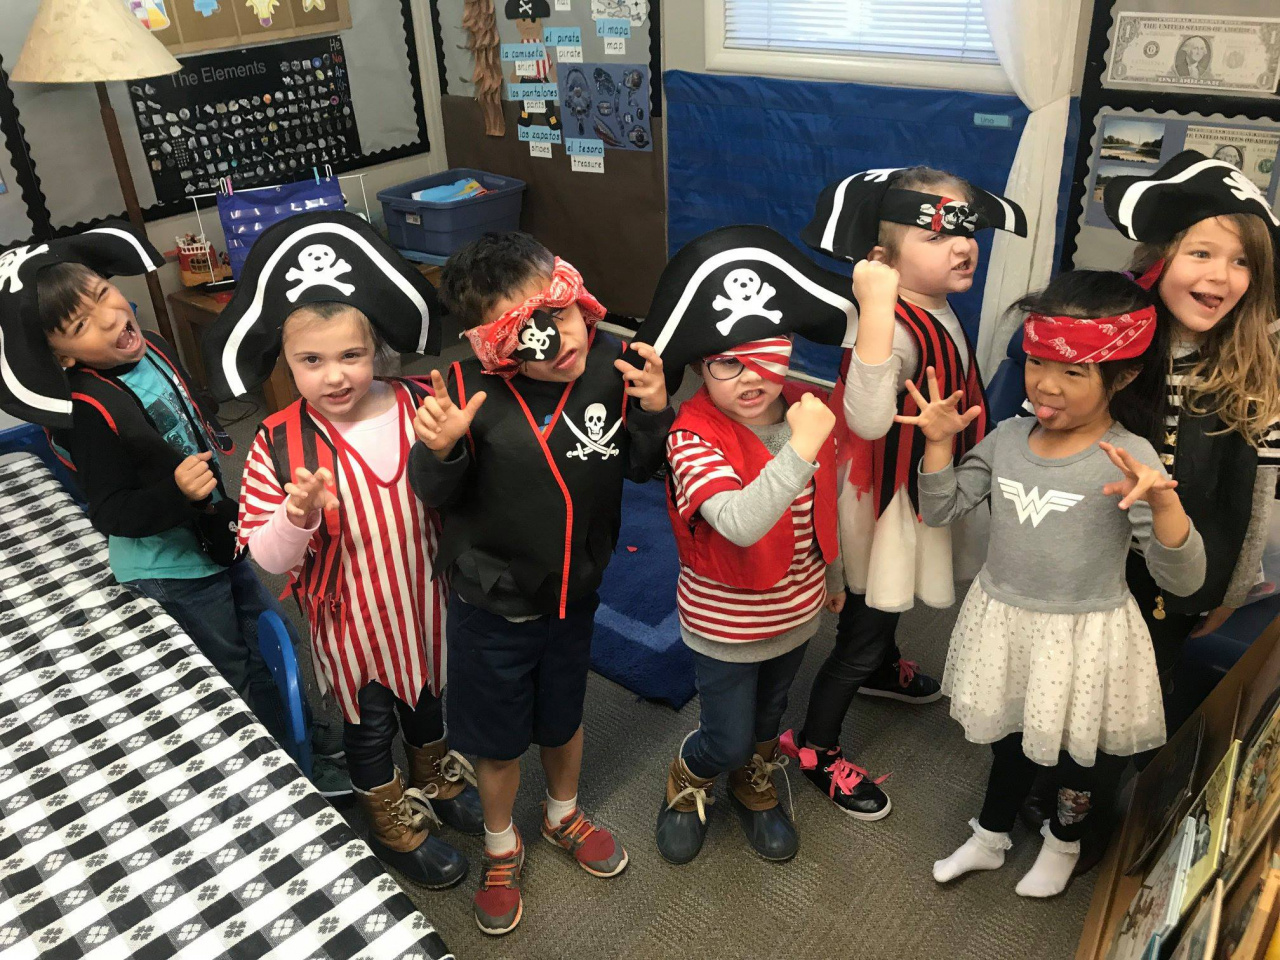 Pirate Fun for the School's Pirate Day